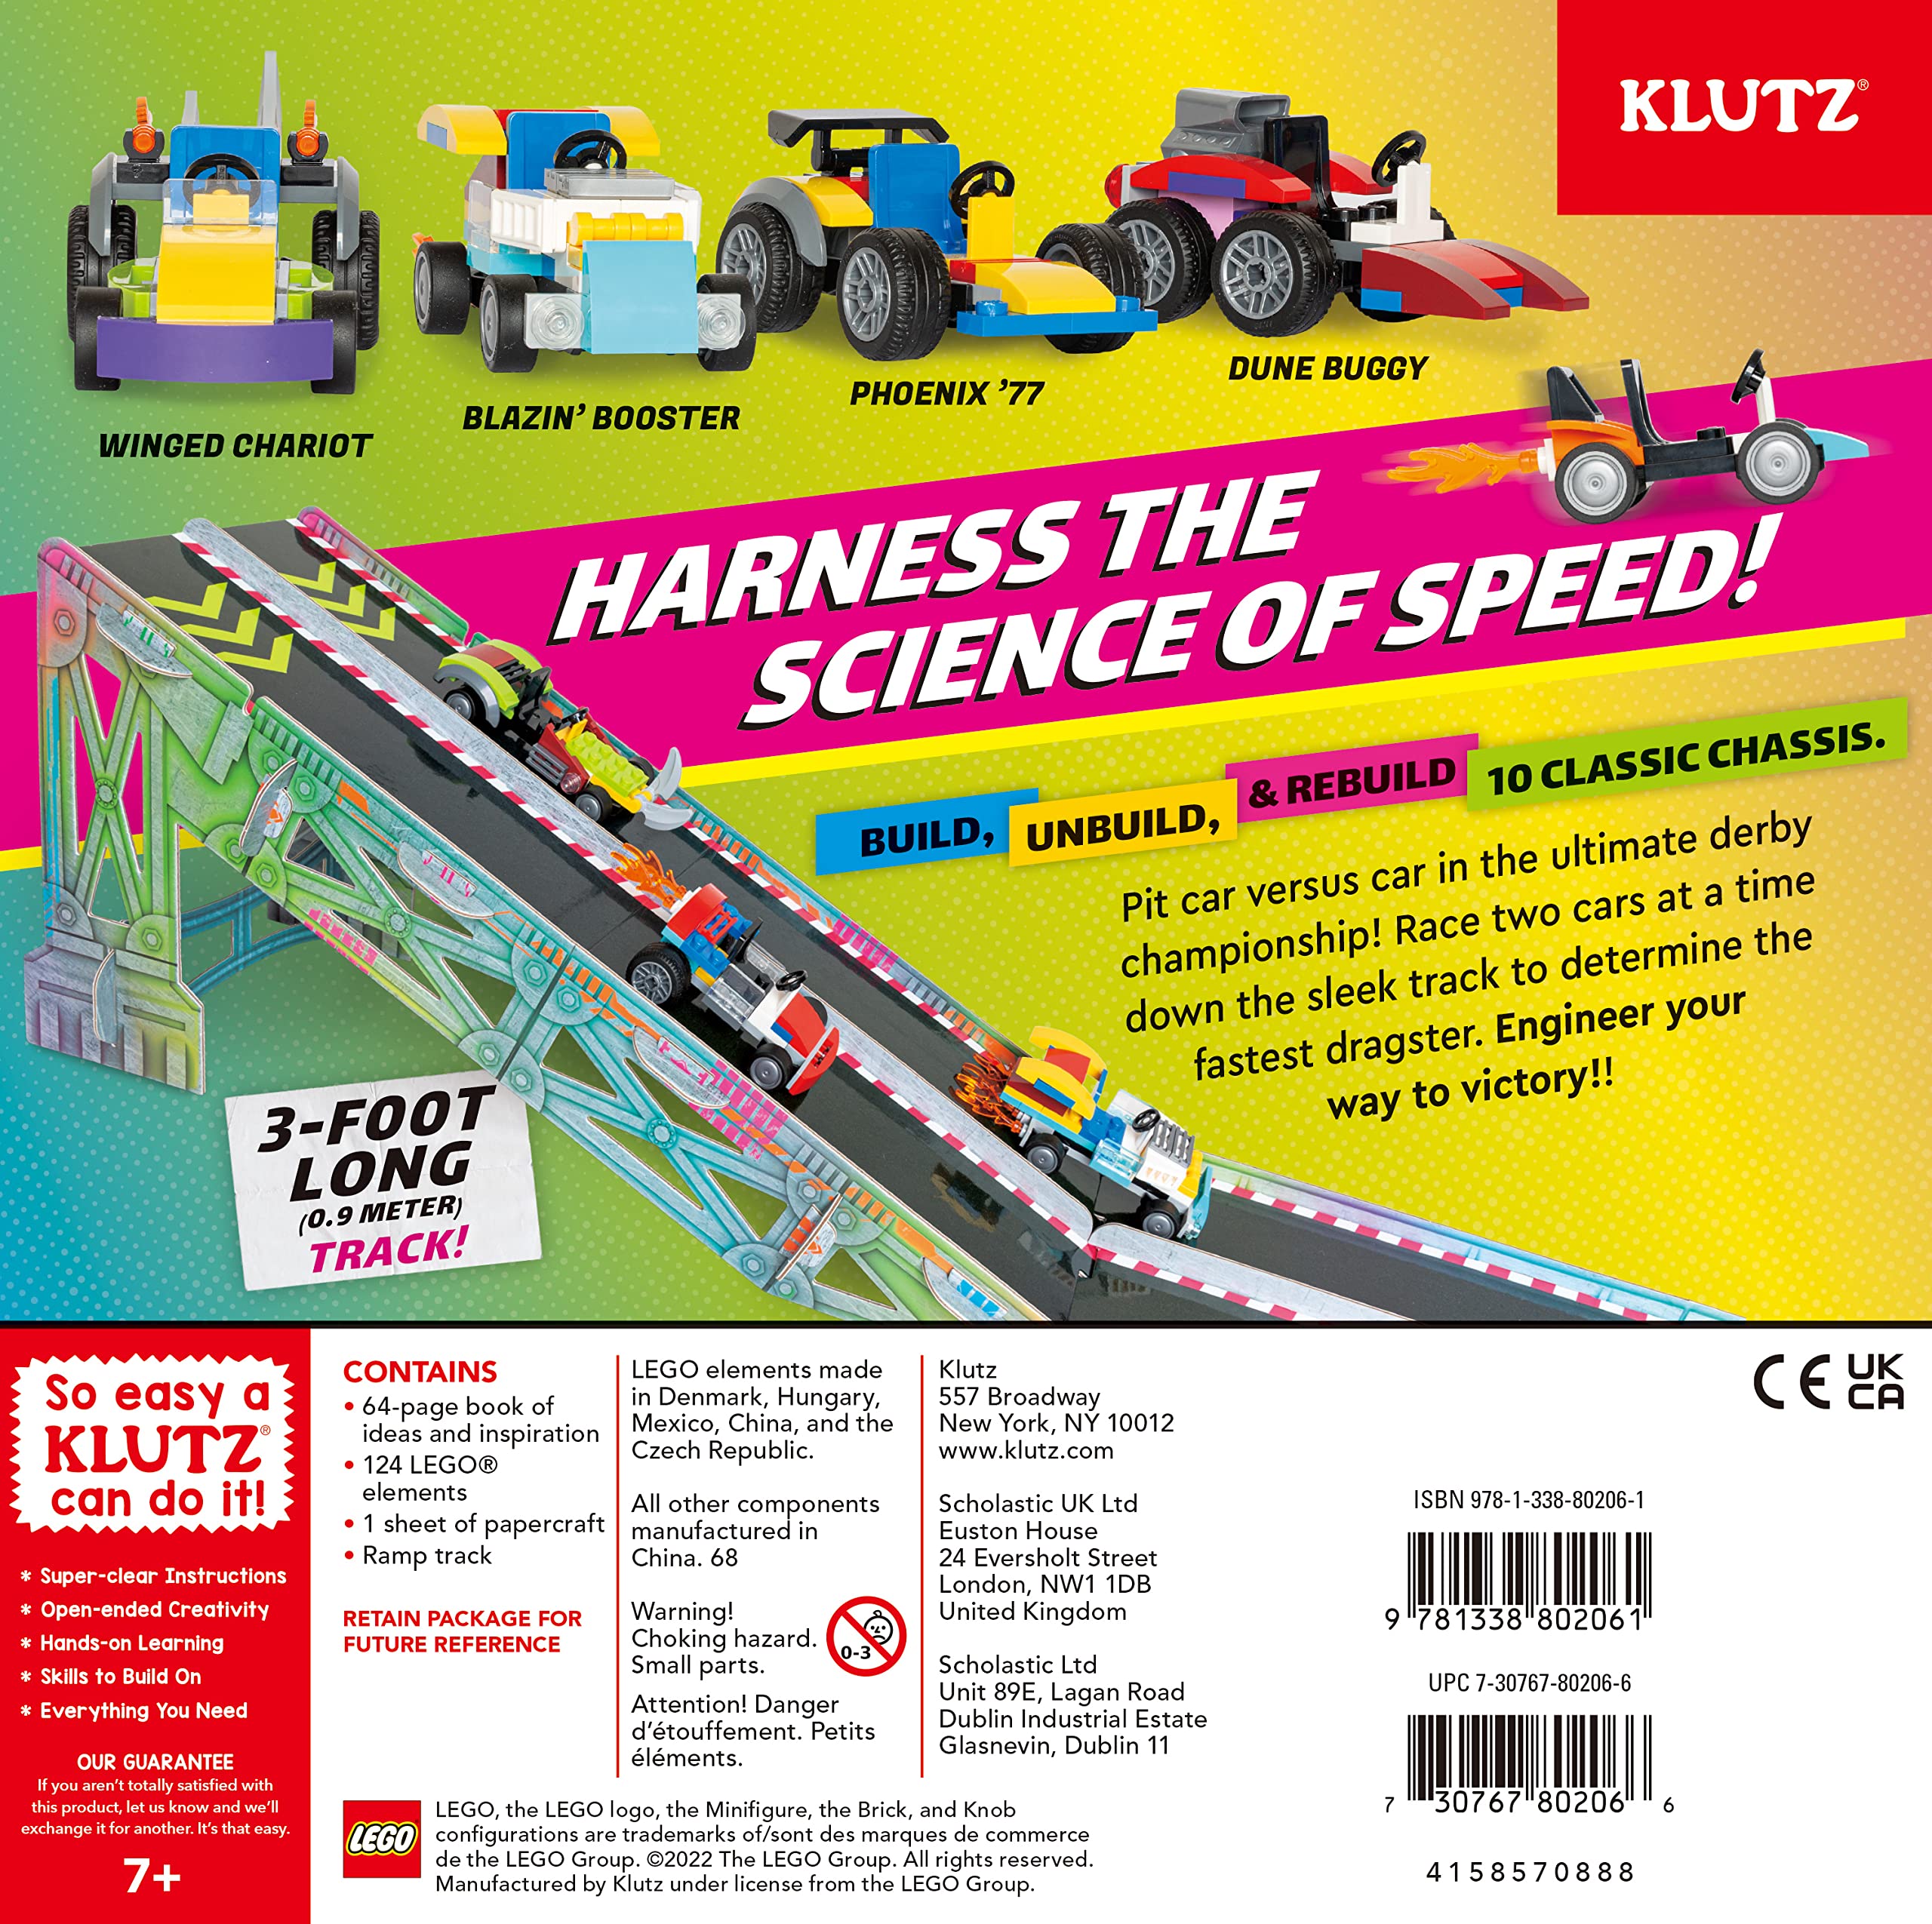 Klutz Lego Race Cars STEM Activity Kit